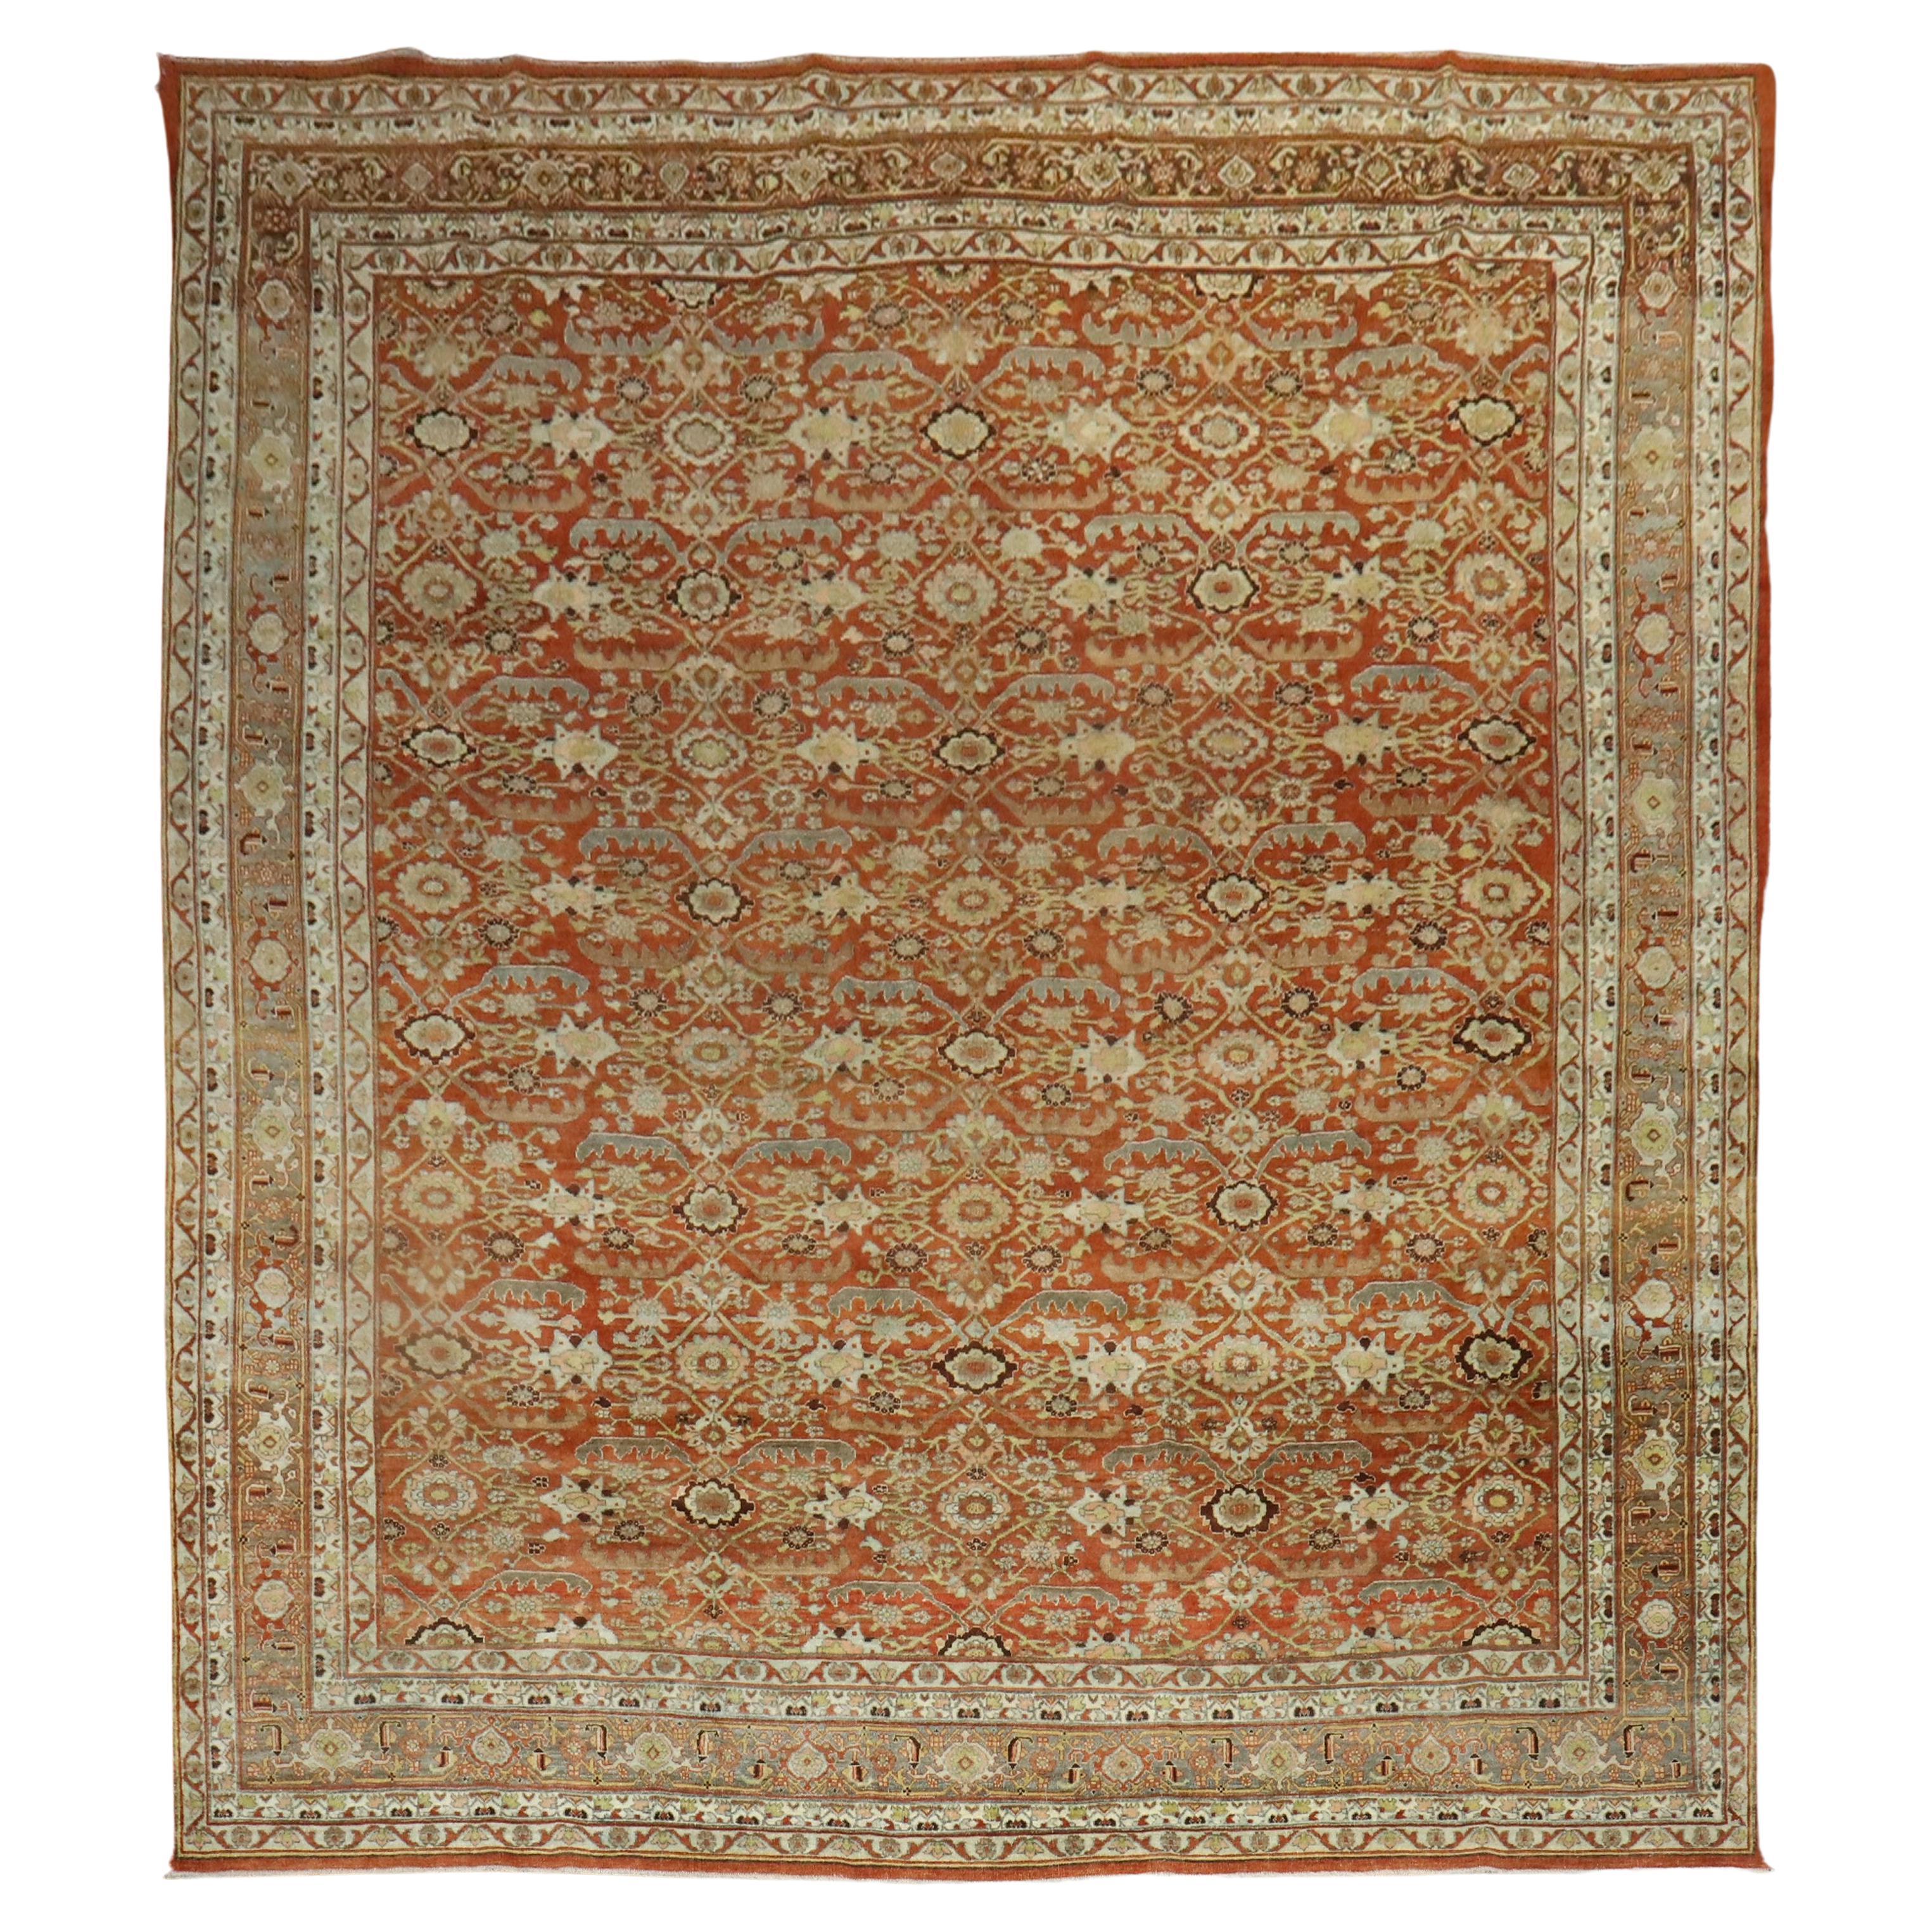 Antiker antiker Bidjar-Teppich aus Persien